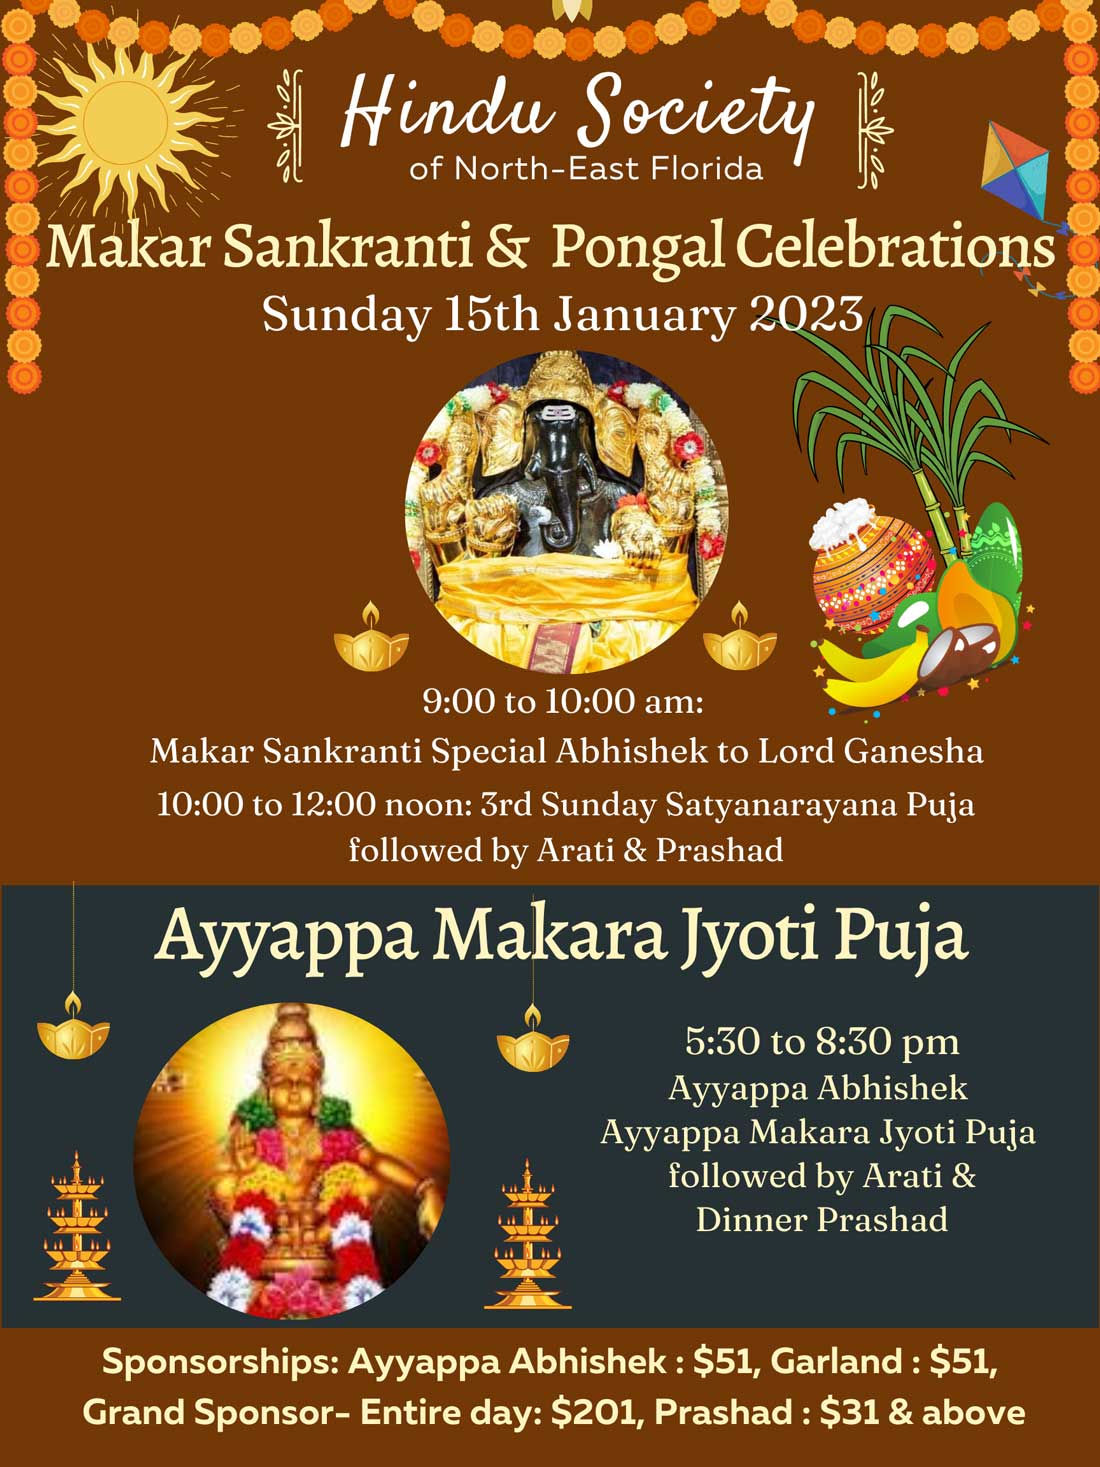 Makar Sankranti & Pongal Celebrations
Sunday 15th January 2023
9:00 to 10:00 am:
Makar Sankranti Special Abhishek to Lord Ganesha
10:00 to 12:00 noon: 3rd Sunday Satyanarayana Puja followed by Arati & Prashad
Ayyappa Makara Jyoti Puja
5:30 to 8:30 pm
Ayyappa Abhishek
Ayyappa Makara Jyoti Puja followed by Arati &
Dinner Prashad
Sponsorships: Ayyappa Abhishek: $51, Garland: $51, Grand Sponsor- Entire day: $201, Prashad: $31 & above